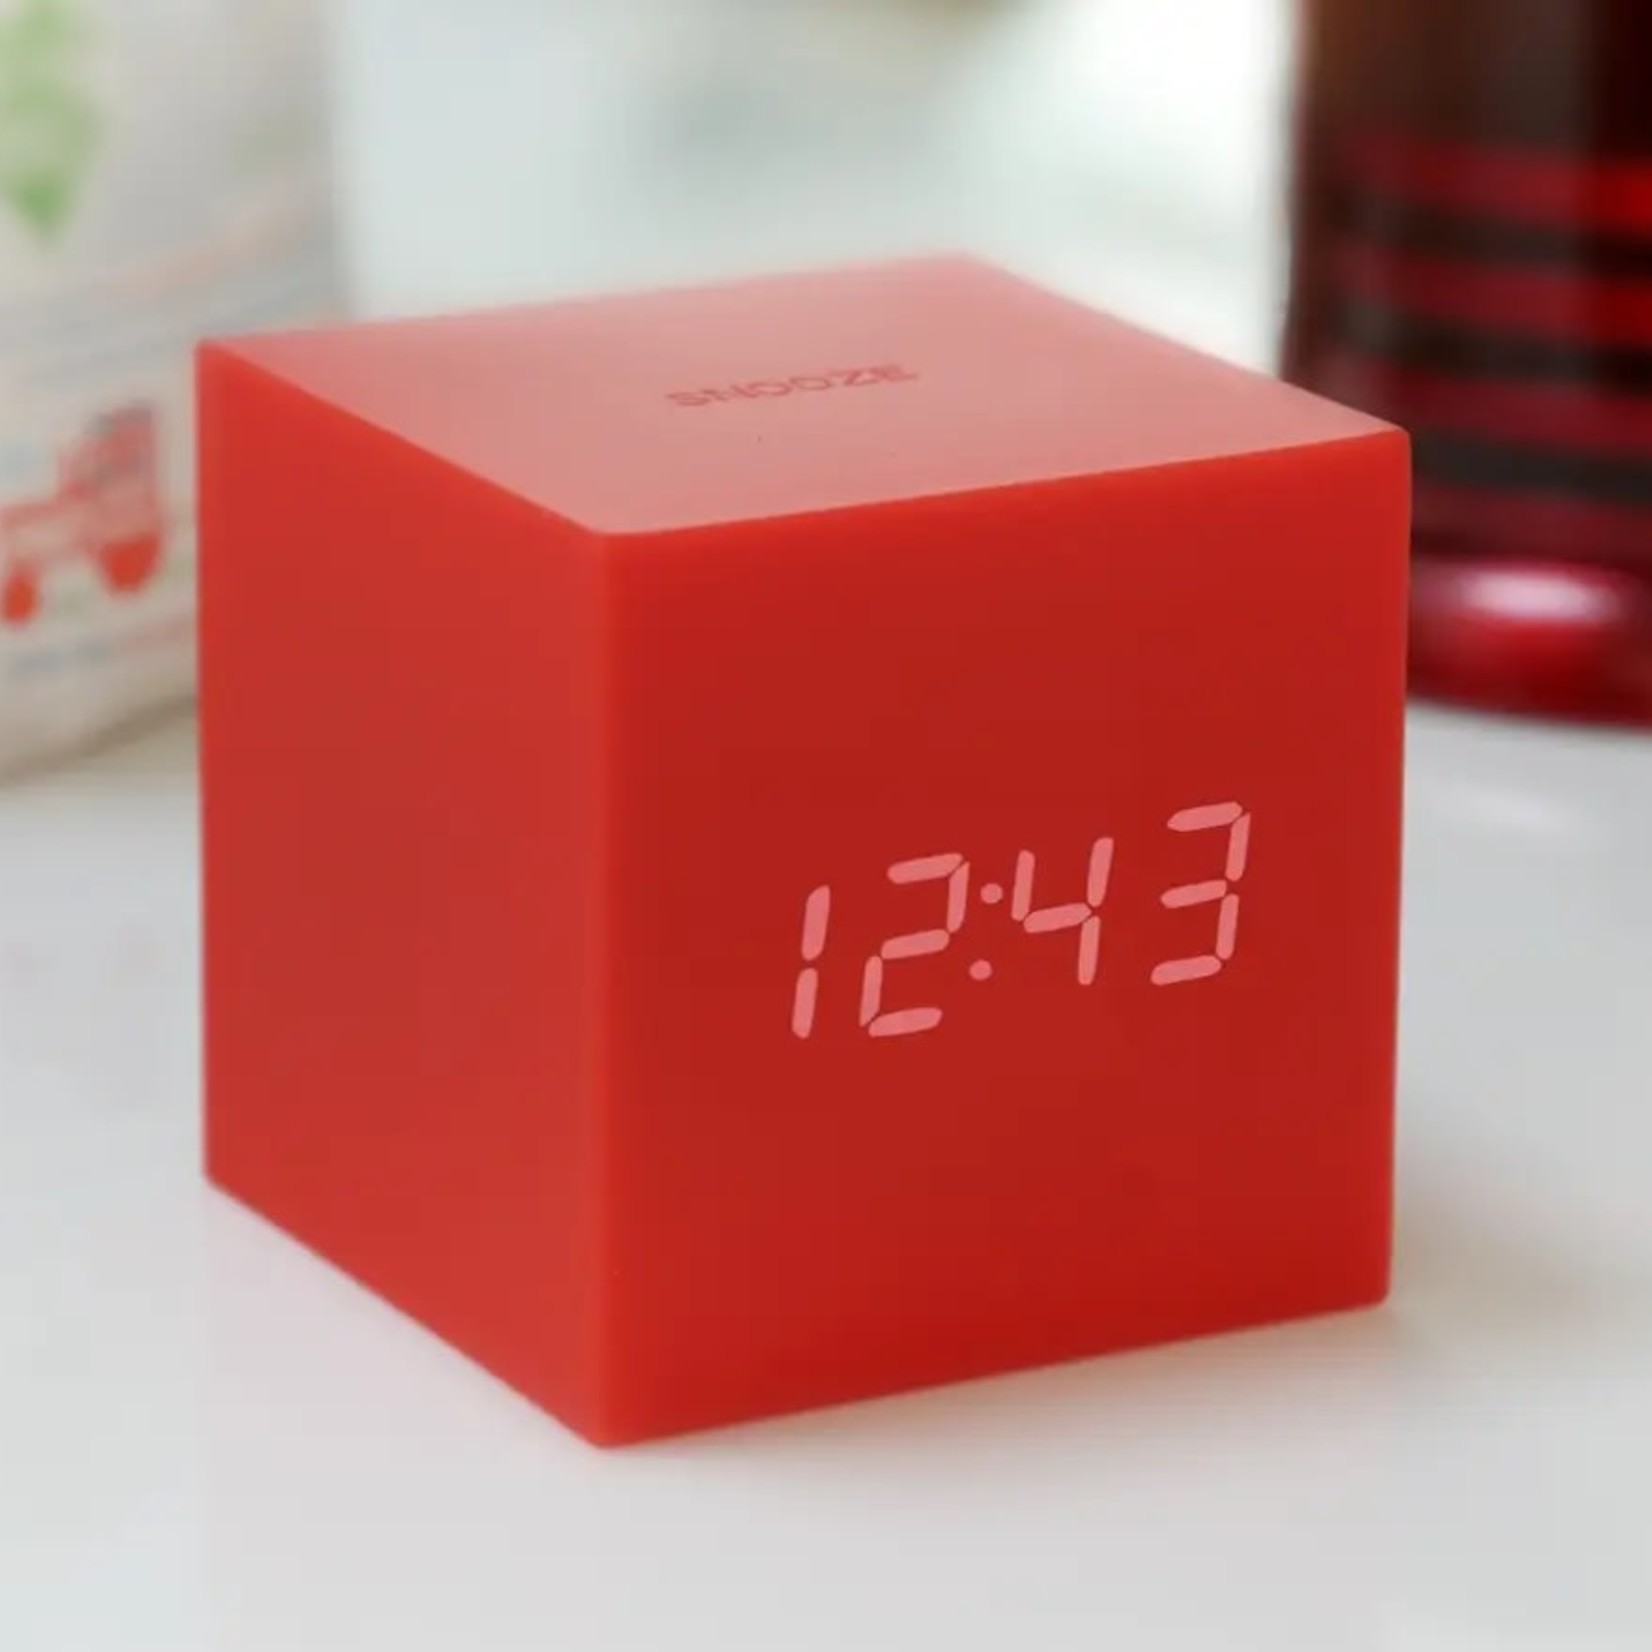 Gingko Design Gingko Gravity Cube Click Clock Red